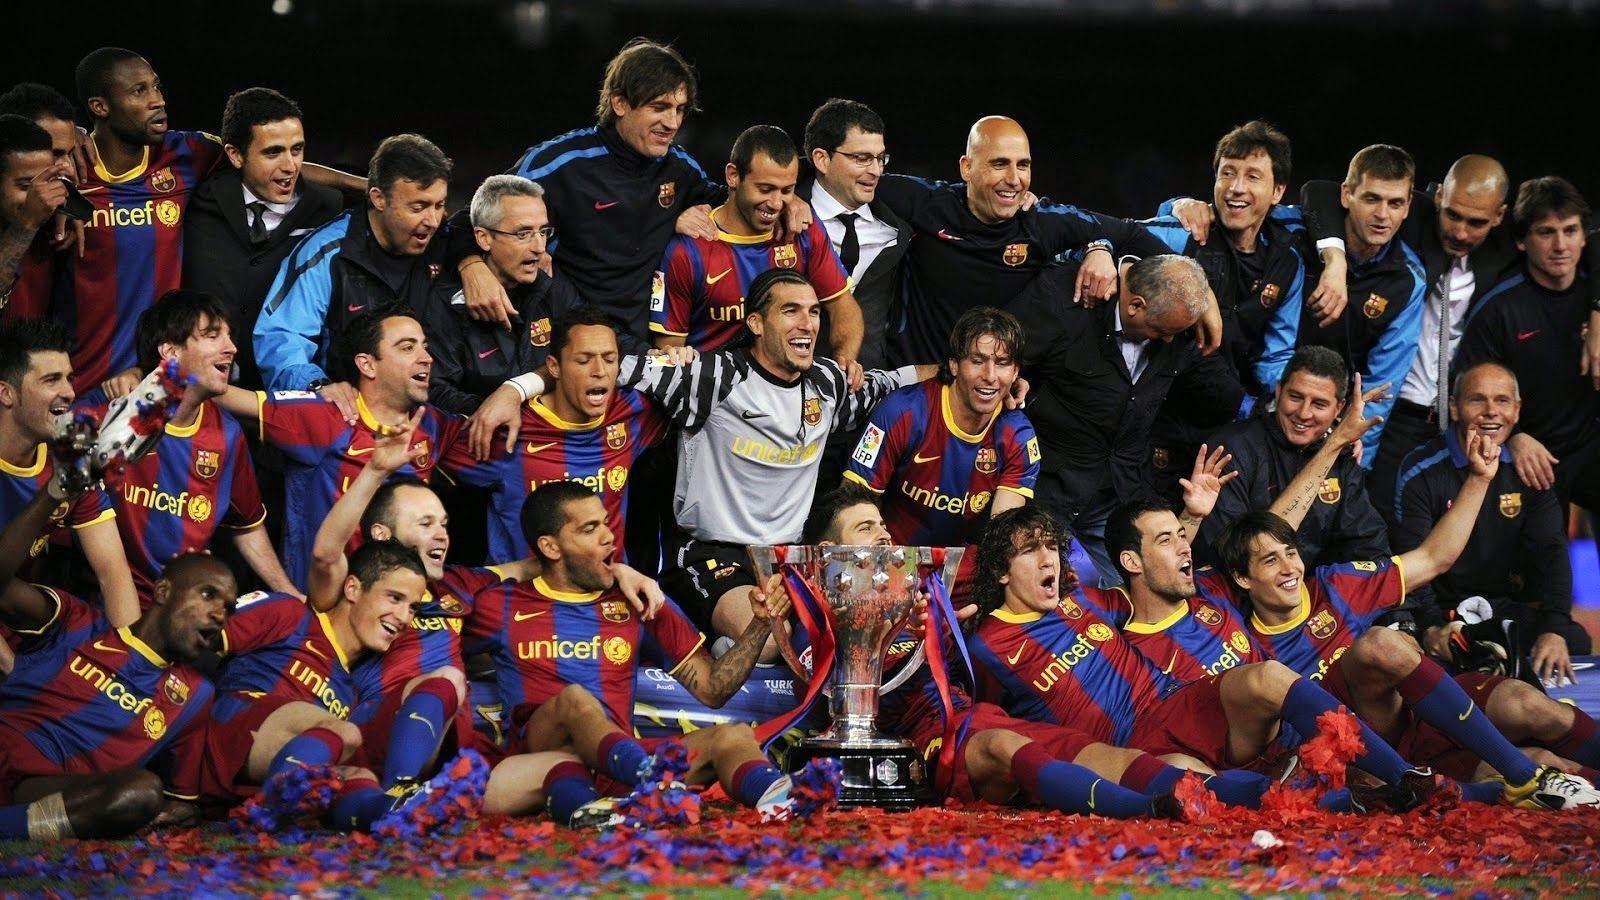 FC Barcelona Players Wallpaper